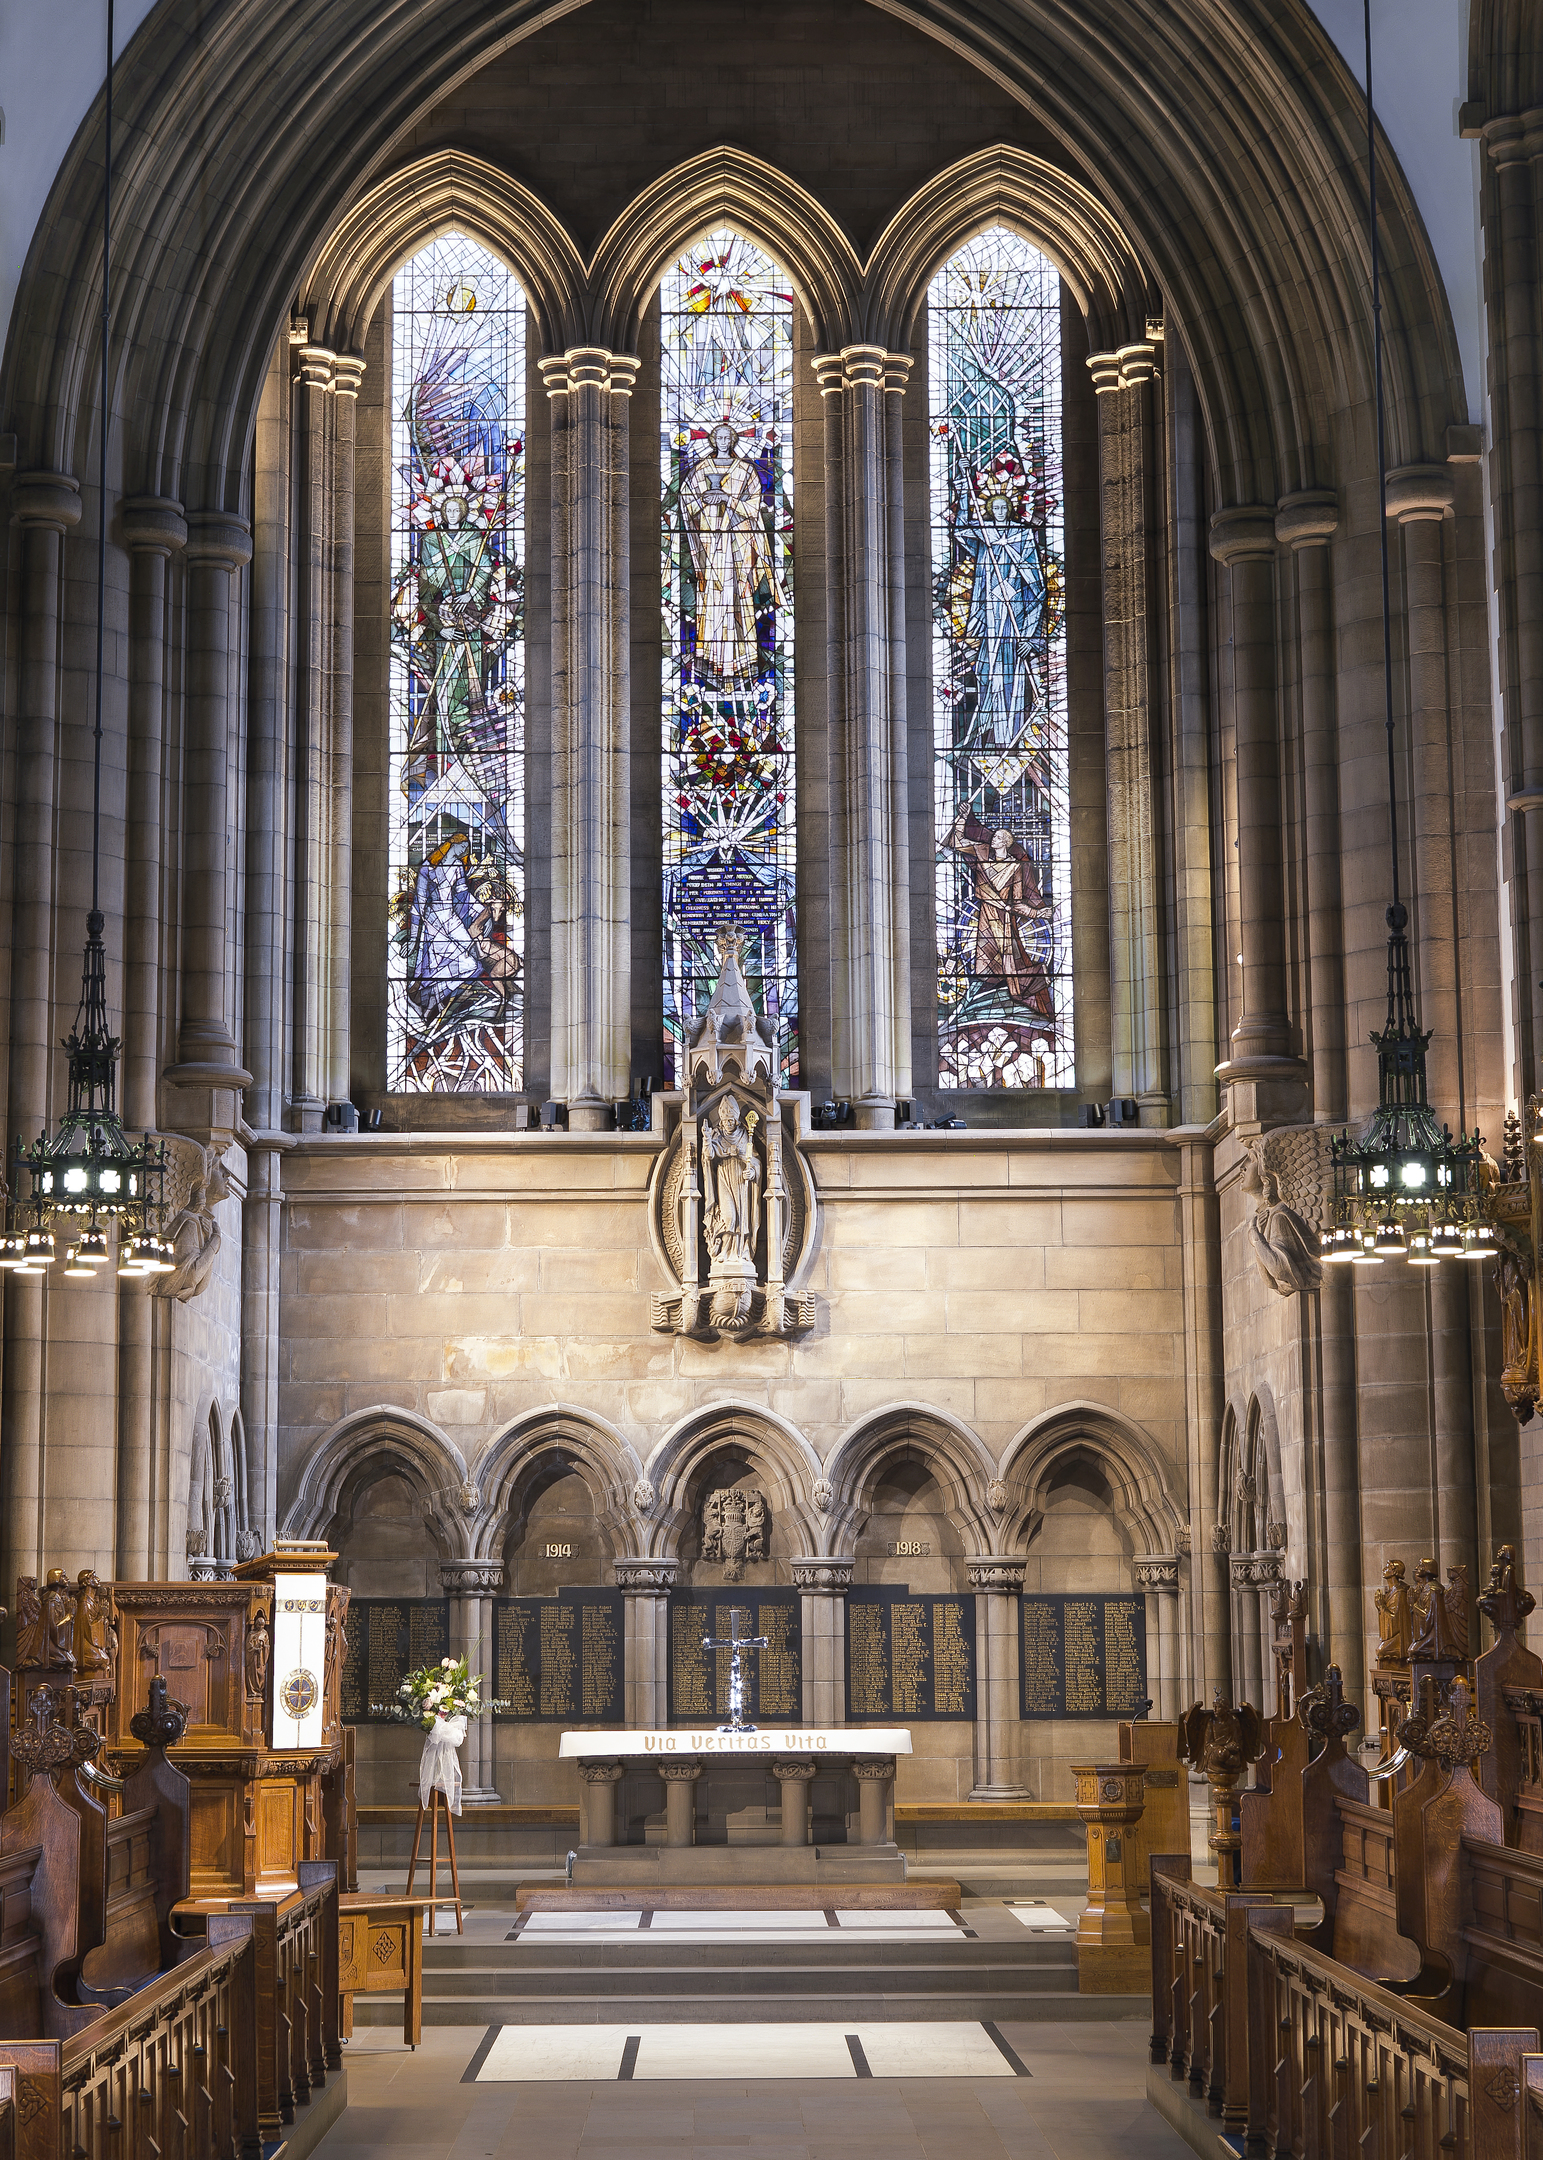 The Memorial Chapel at Glasgow University